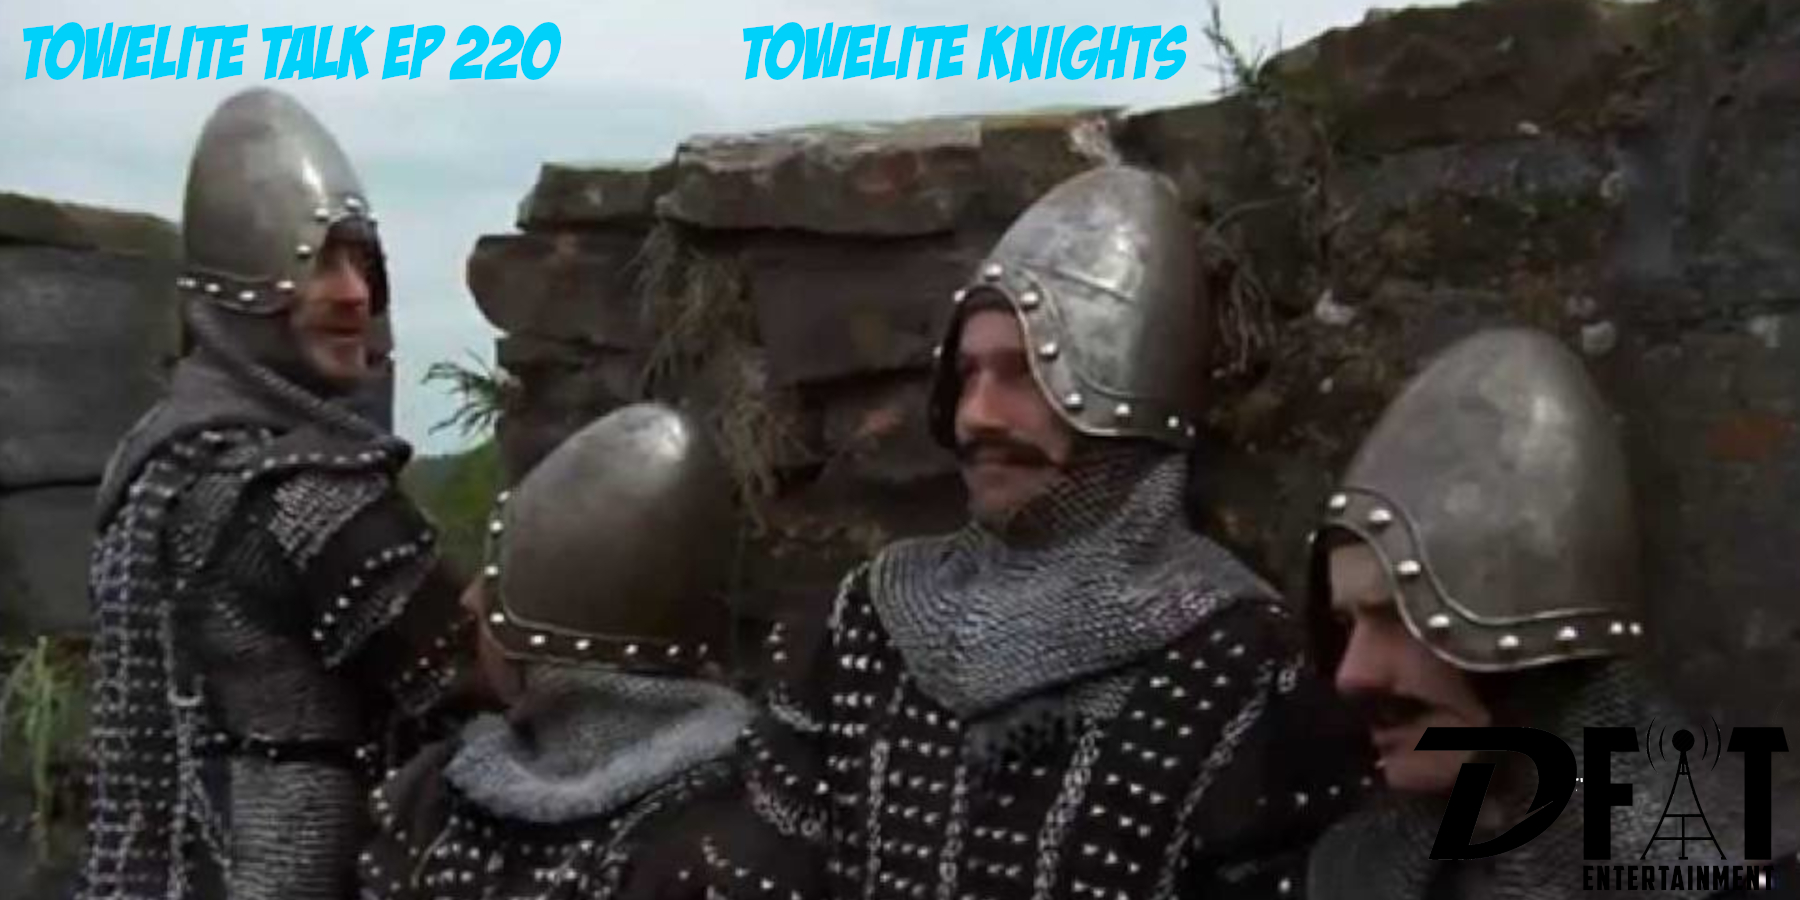 220 - Towelite Knights